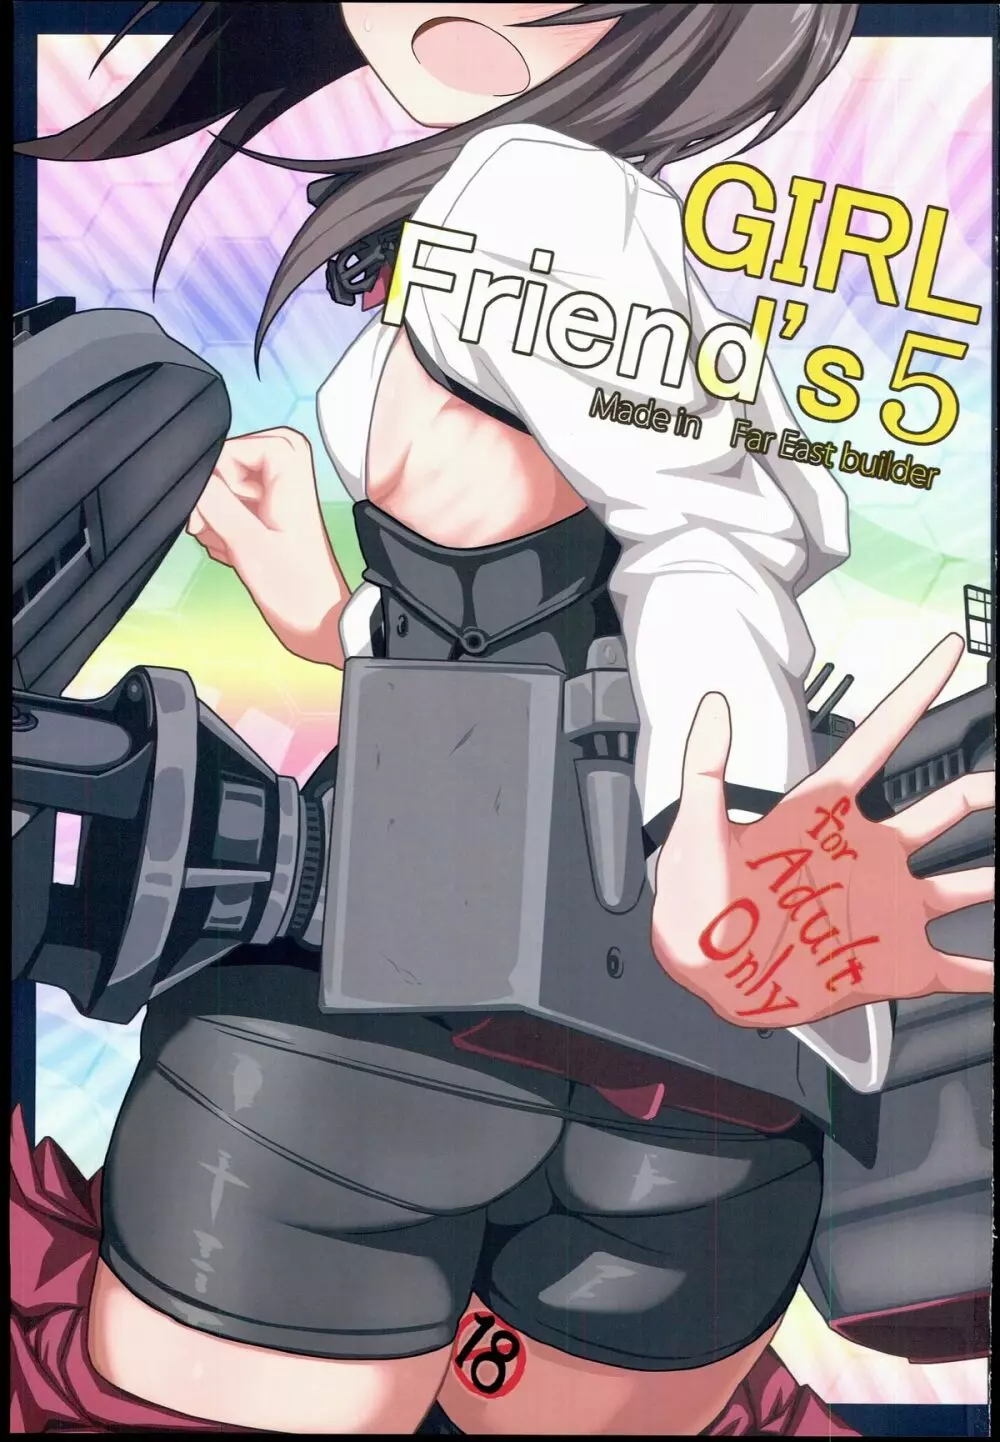 GIRLFriend’s 5